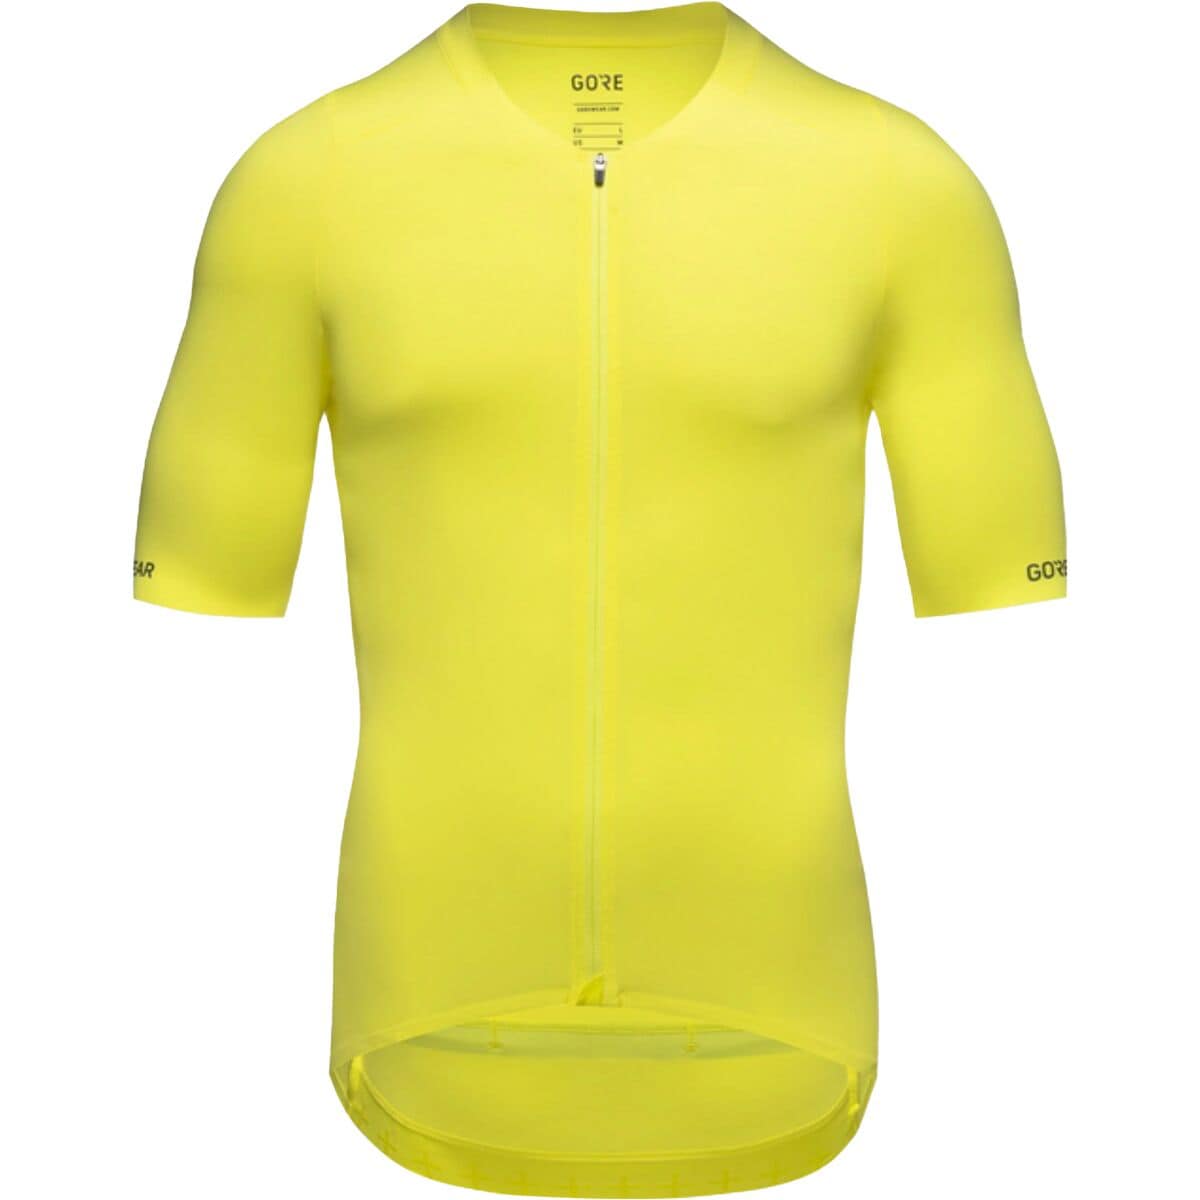 GOREWEAR Distance Jersey - Men's Washed Neon Yellow, US XL/EU XXL